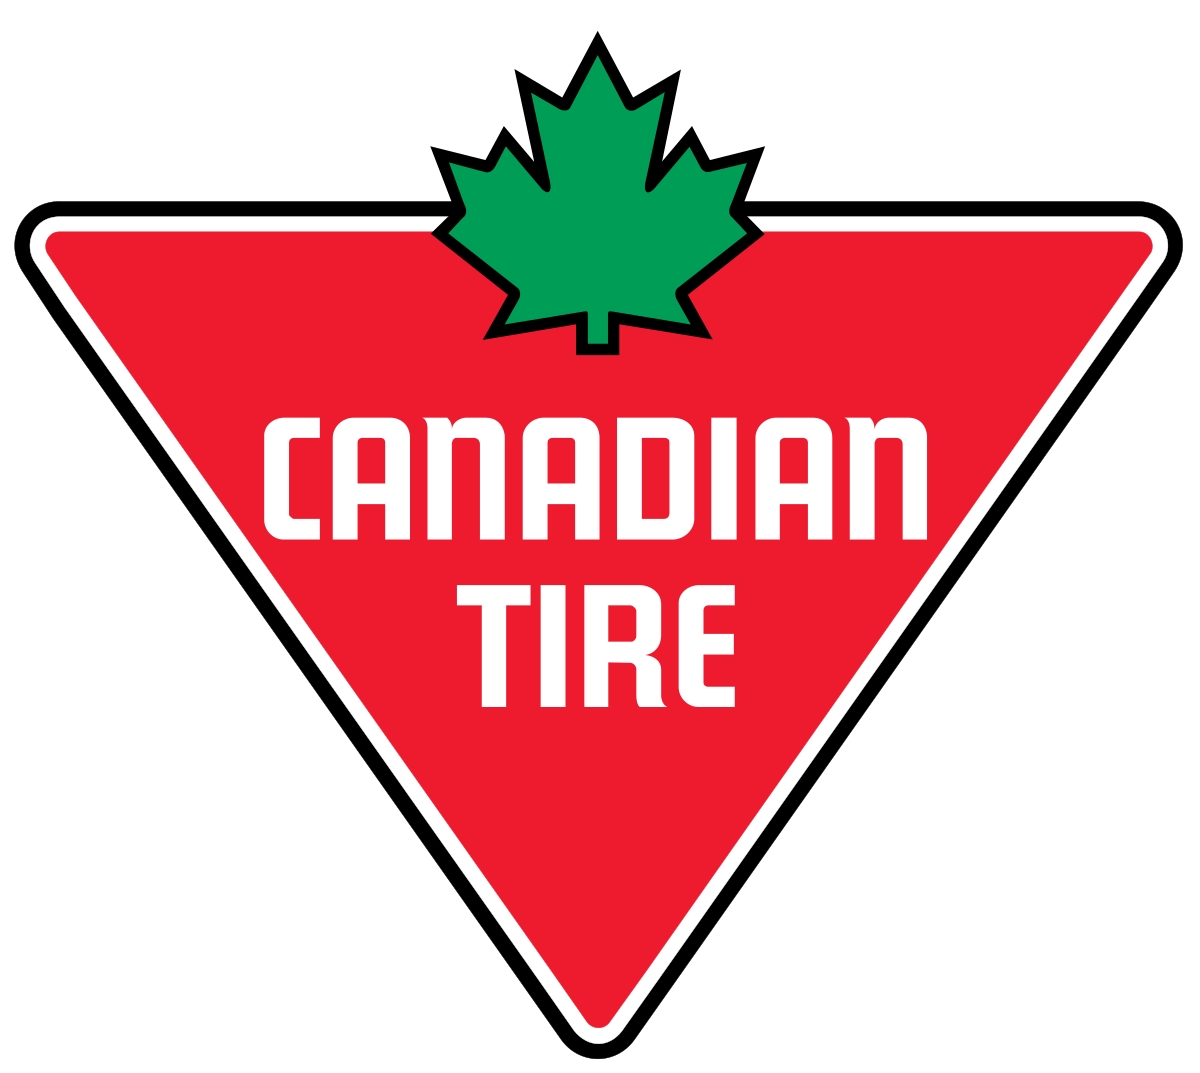 Canadian Tire Corporation 